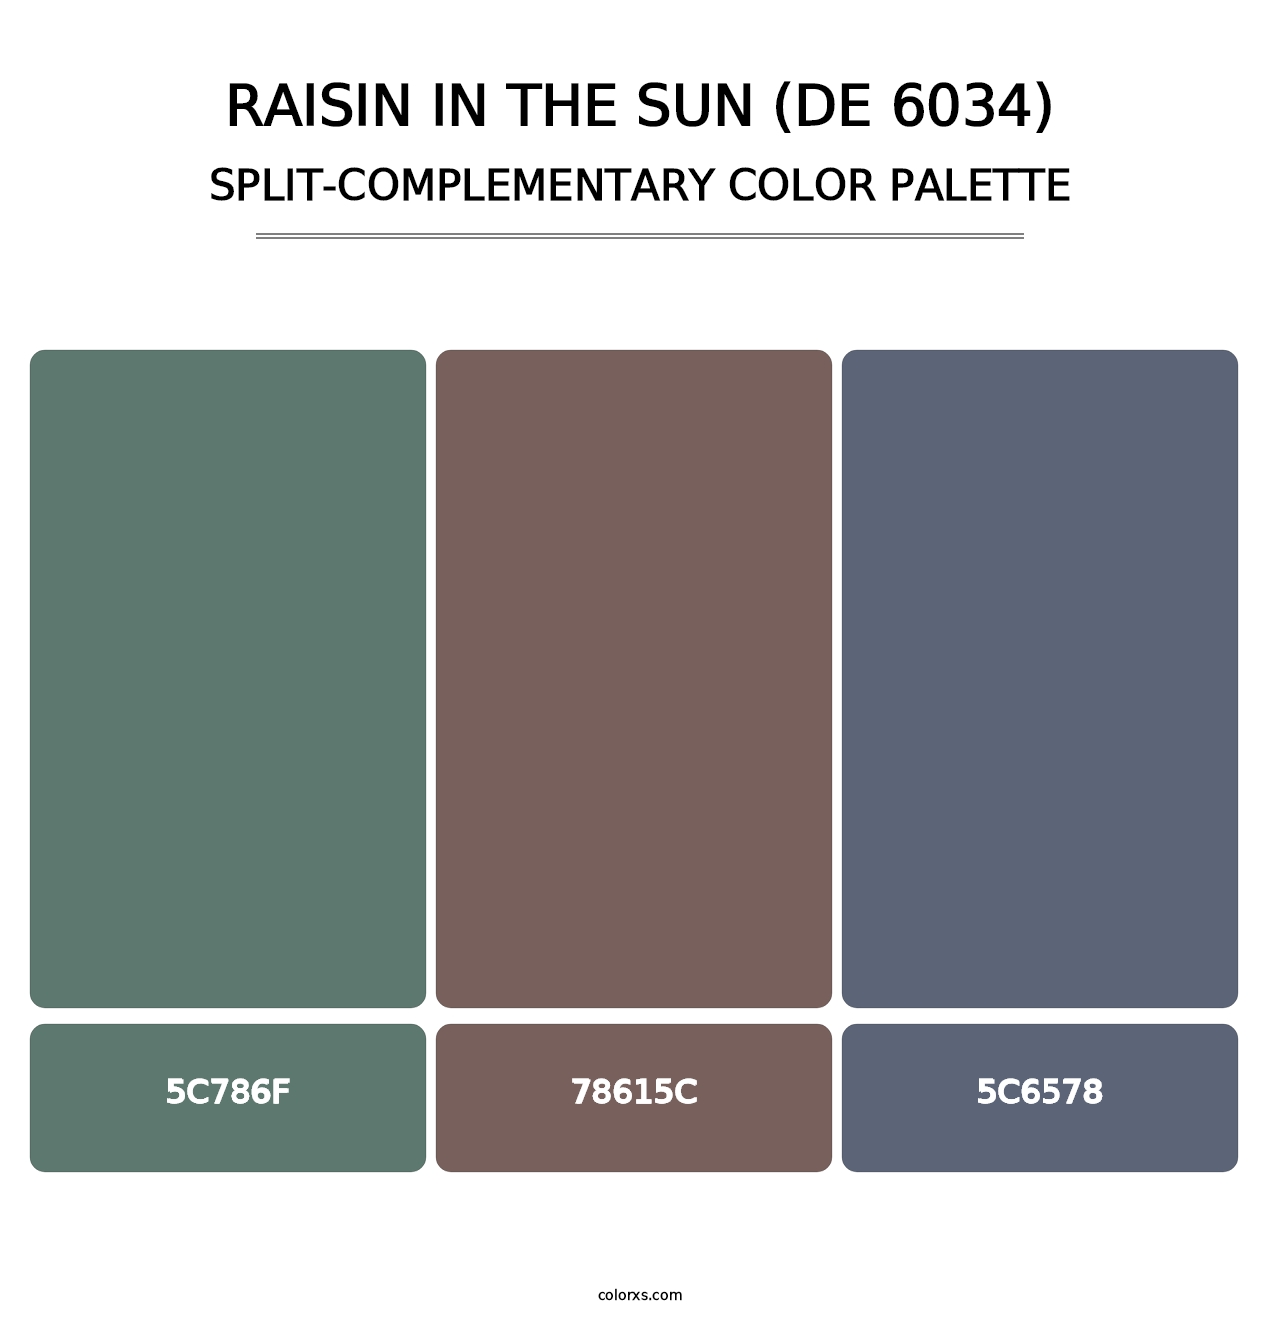 Raisin in the Sun (DE 6034) - Split-Complementary Color Palette